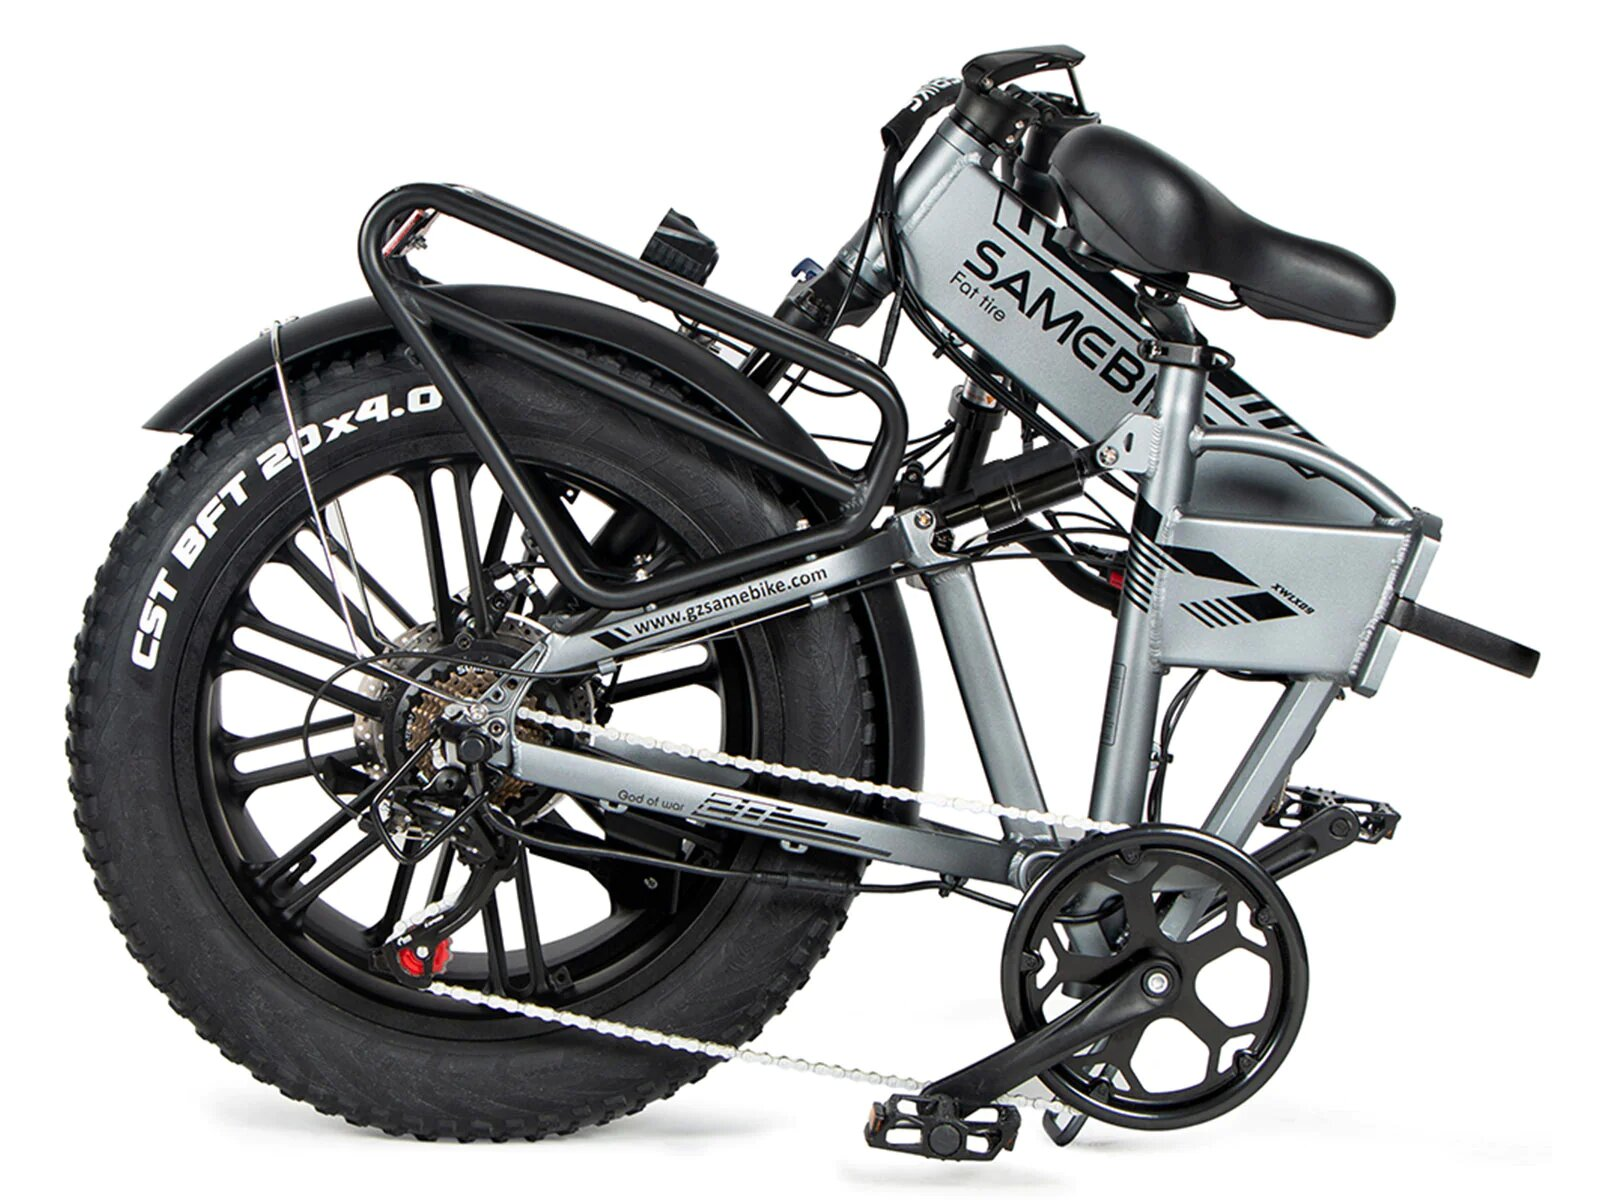 SAMEBIKE Mountainbike Schwarz) (Laufradgröße: 20 E-BIKE Zoll, Unisex-Rad,